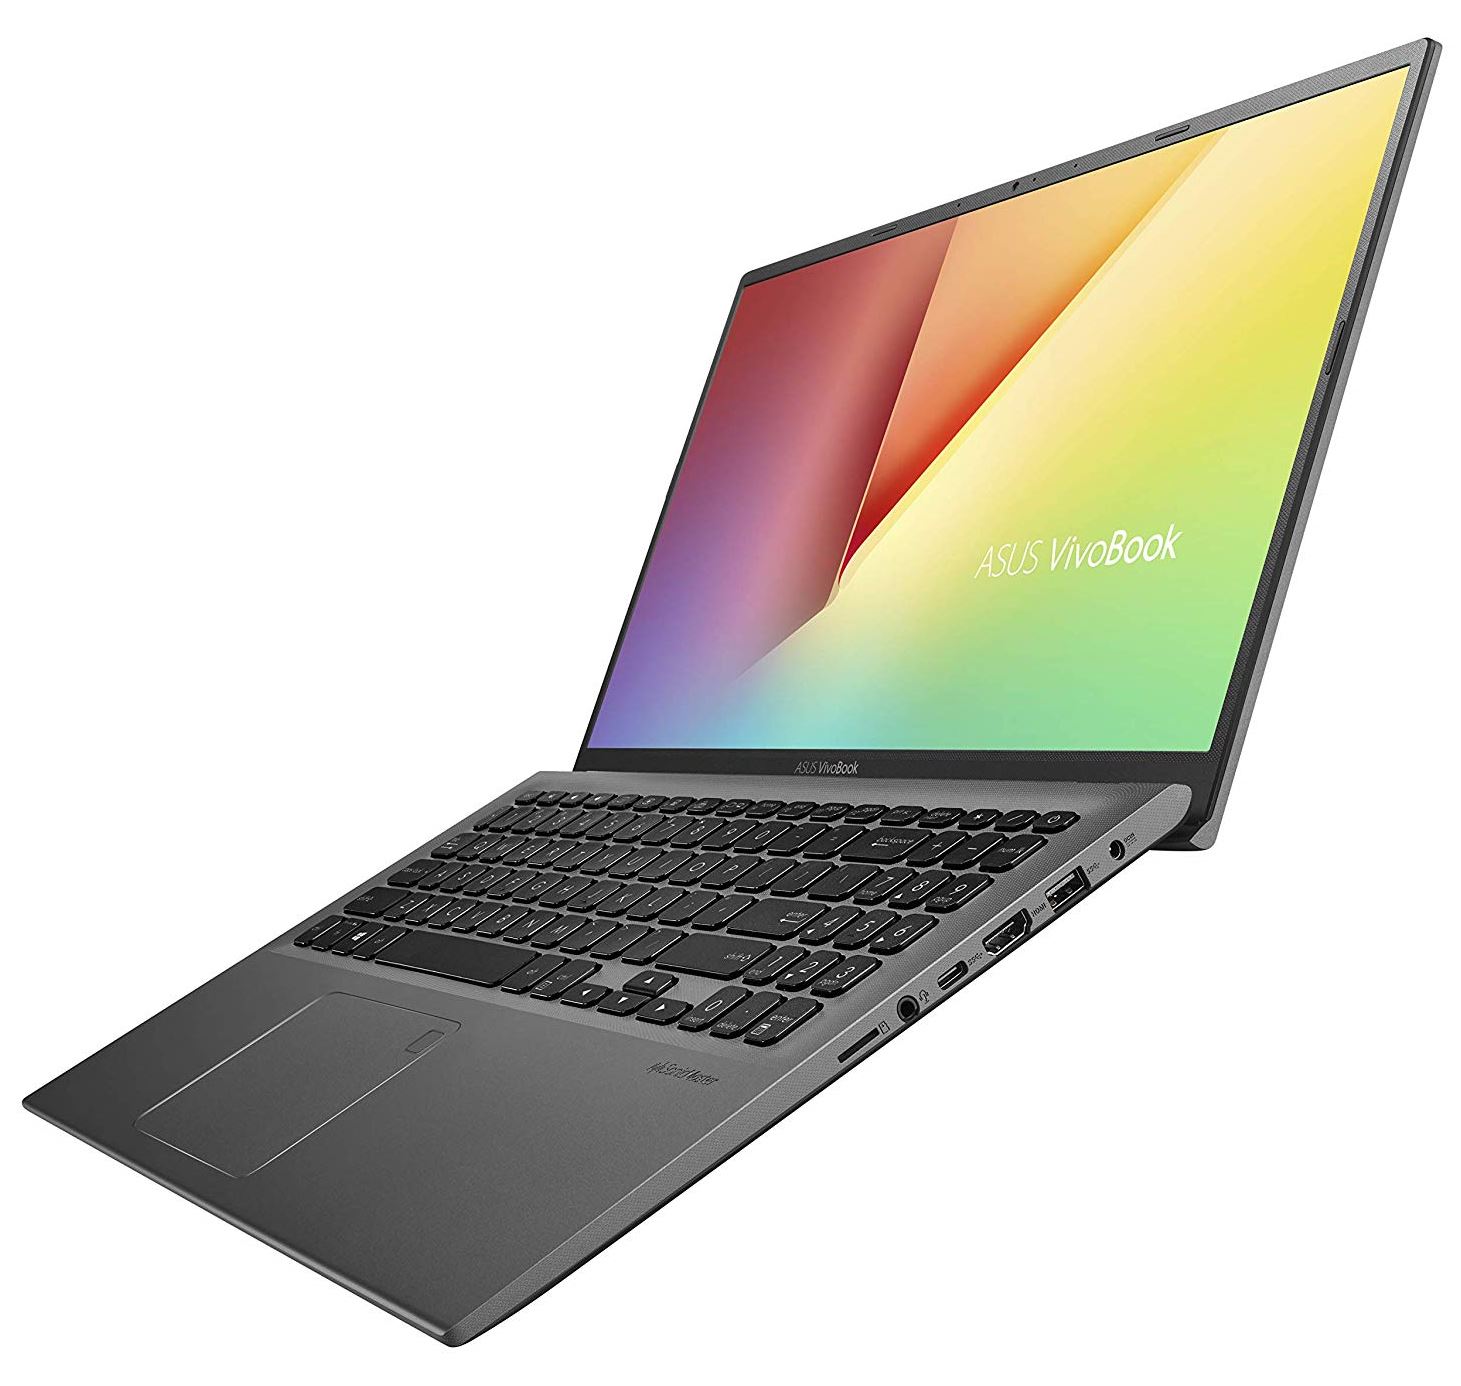 Asus VivoBook 15 F512DA-EB51 Thin & Light 15.6″ Laptop (FHD, AMD Ryzen 5 3500U, 8GB RAM, 256GB SSD)